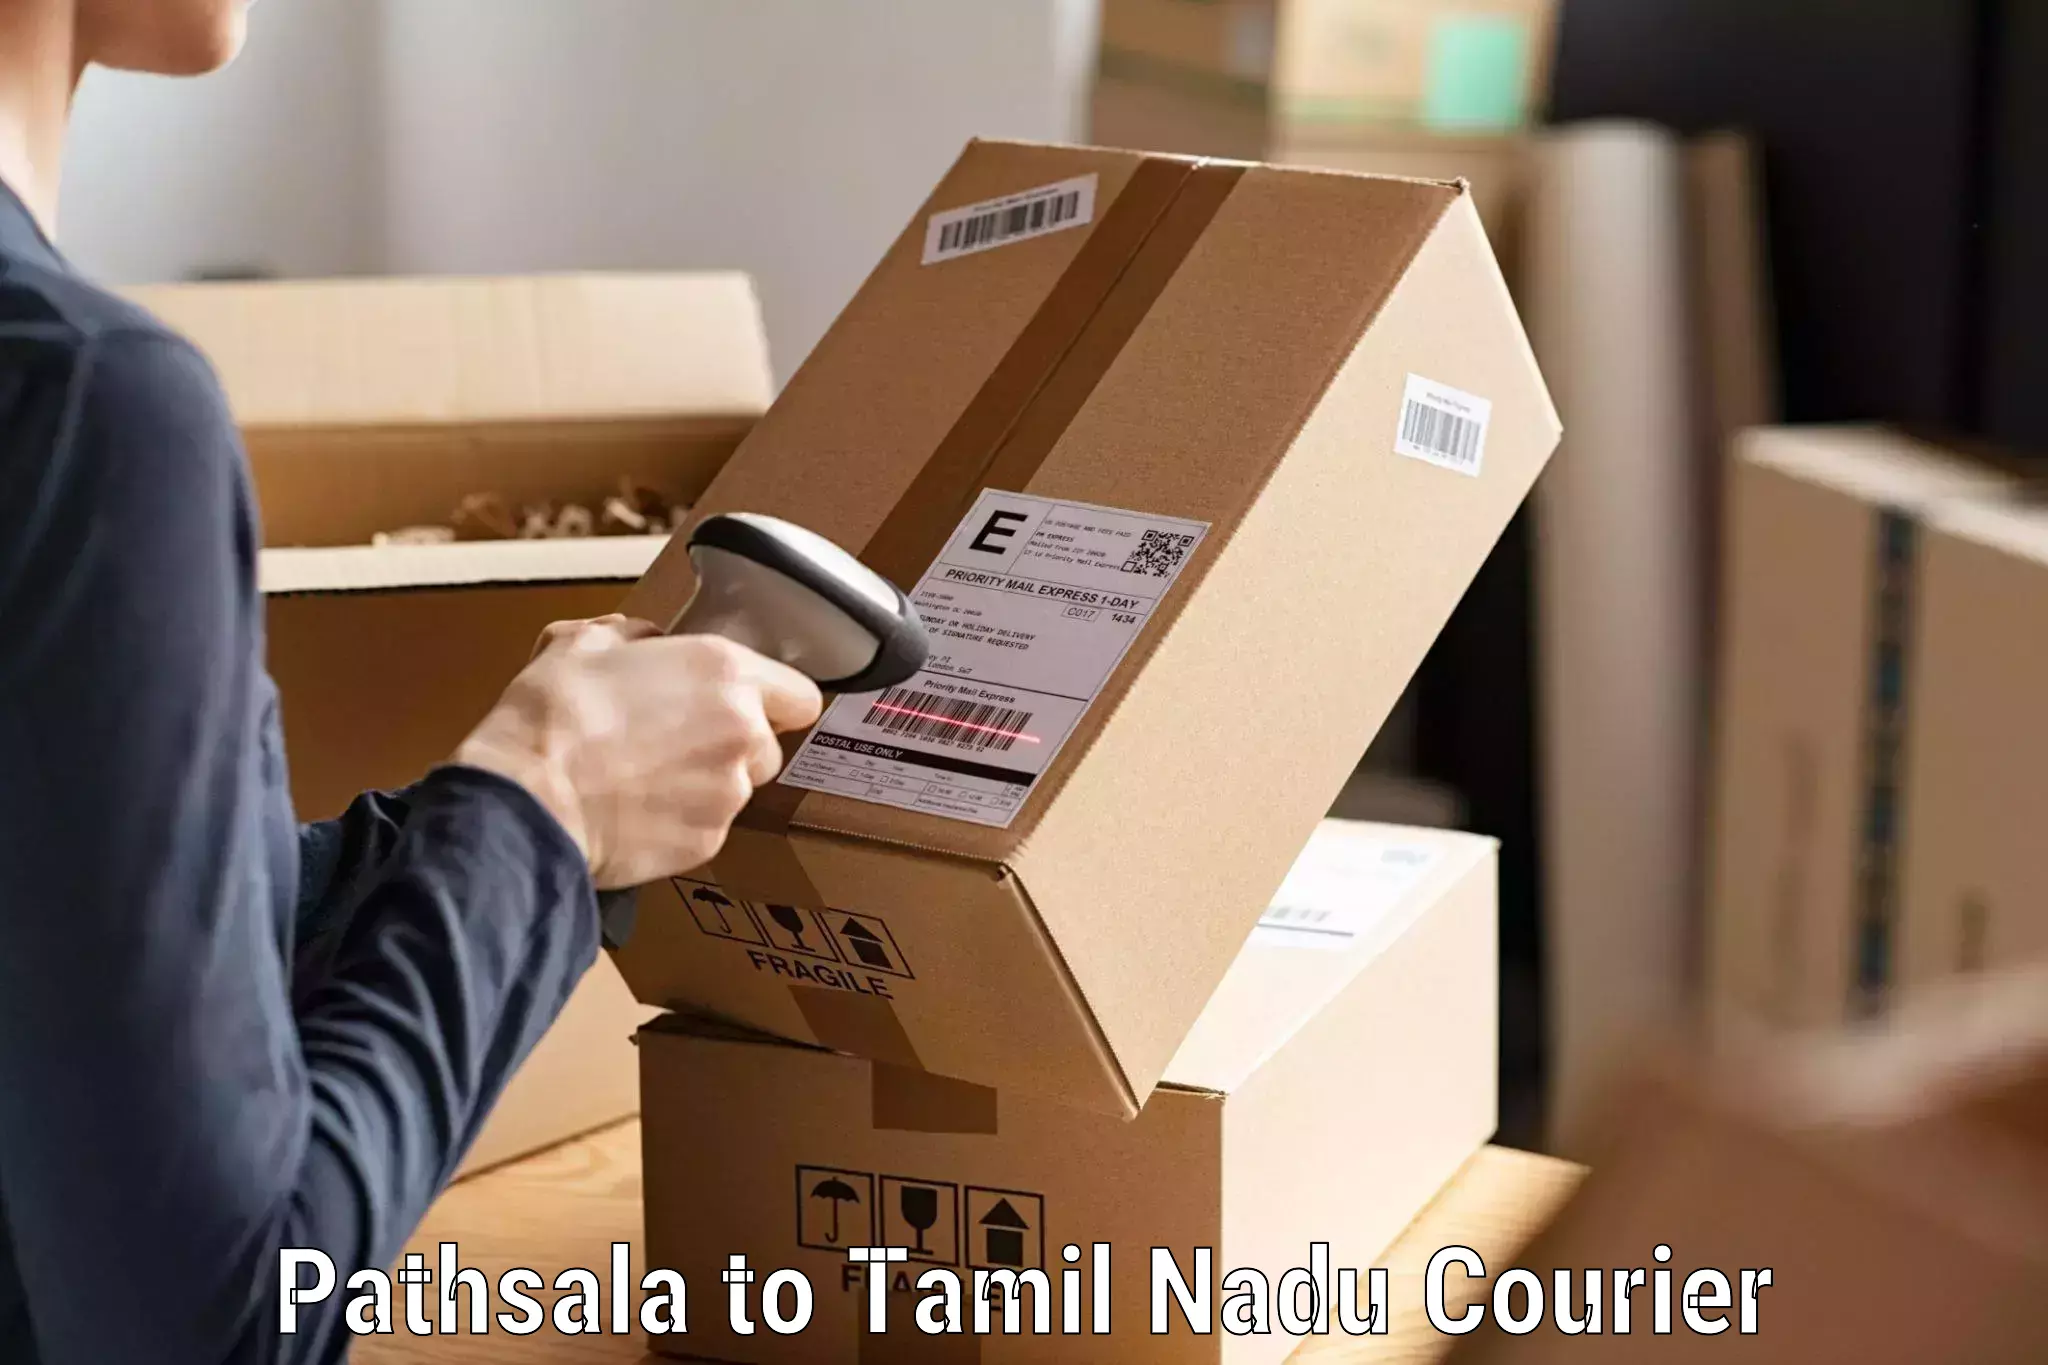 Courier service booking Pathsala to Viluppuram